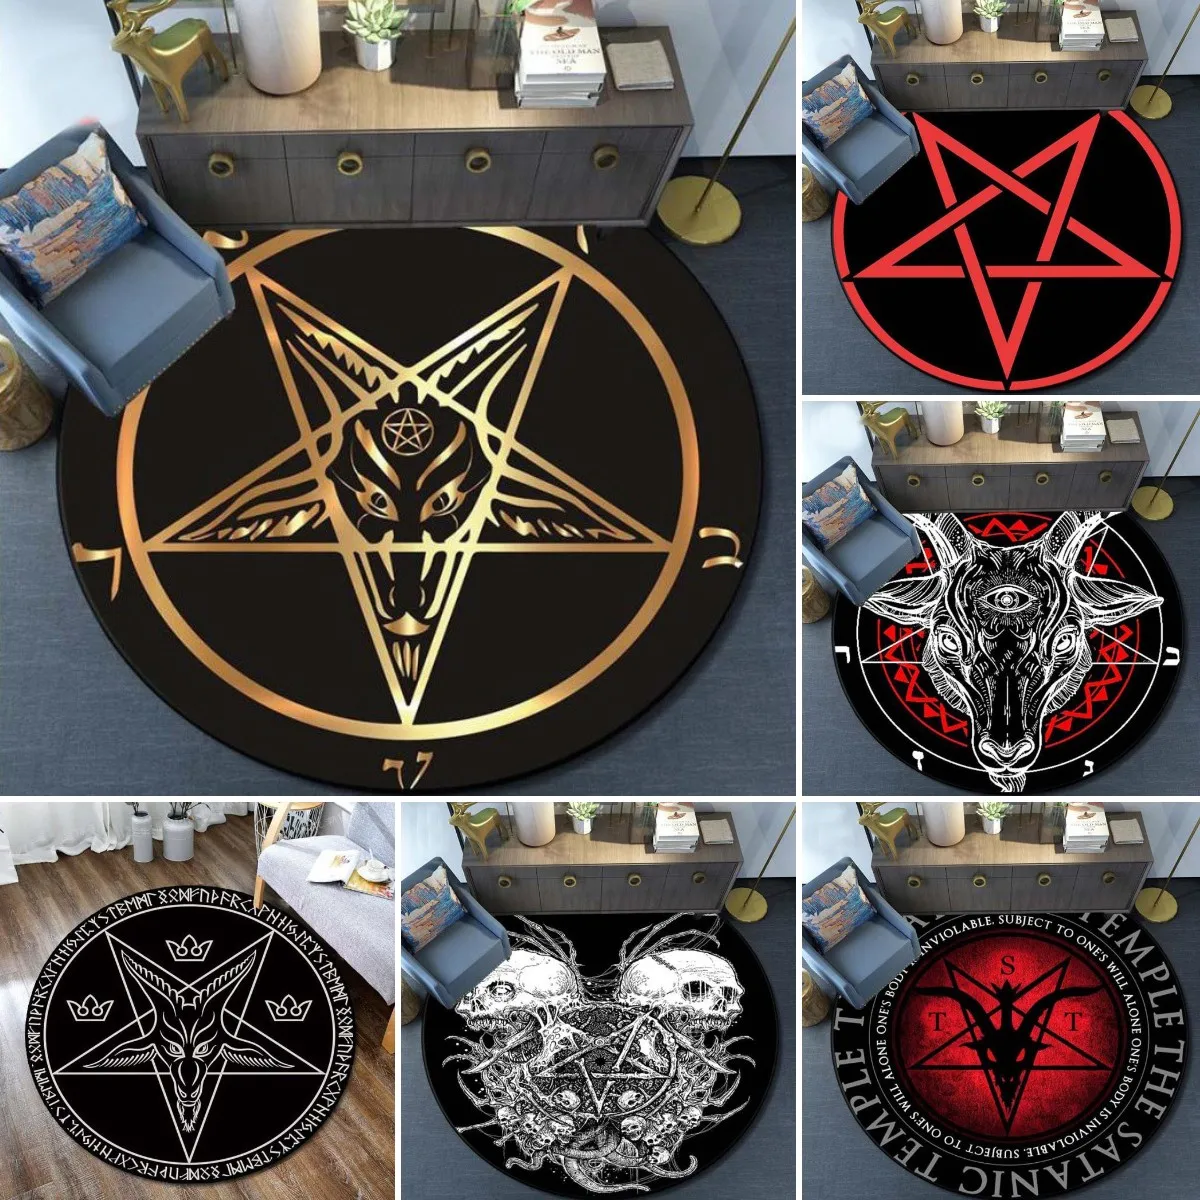 

Skull Satanic Goat Pentagram Wing Demon Version Carpet Round Rugs Non-slip Area Rug for Living Room Bedroom Foot Pad Decoration